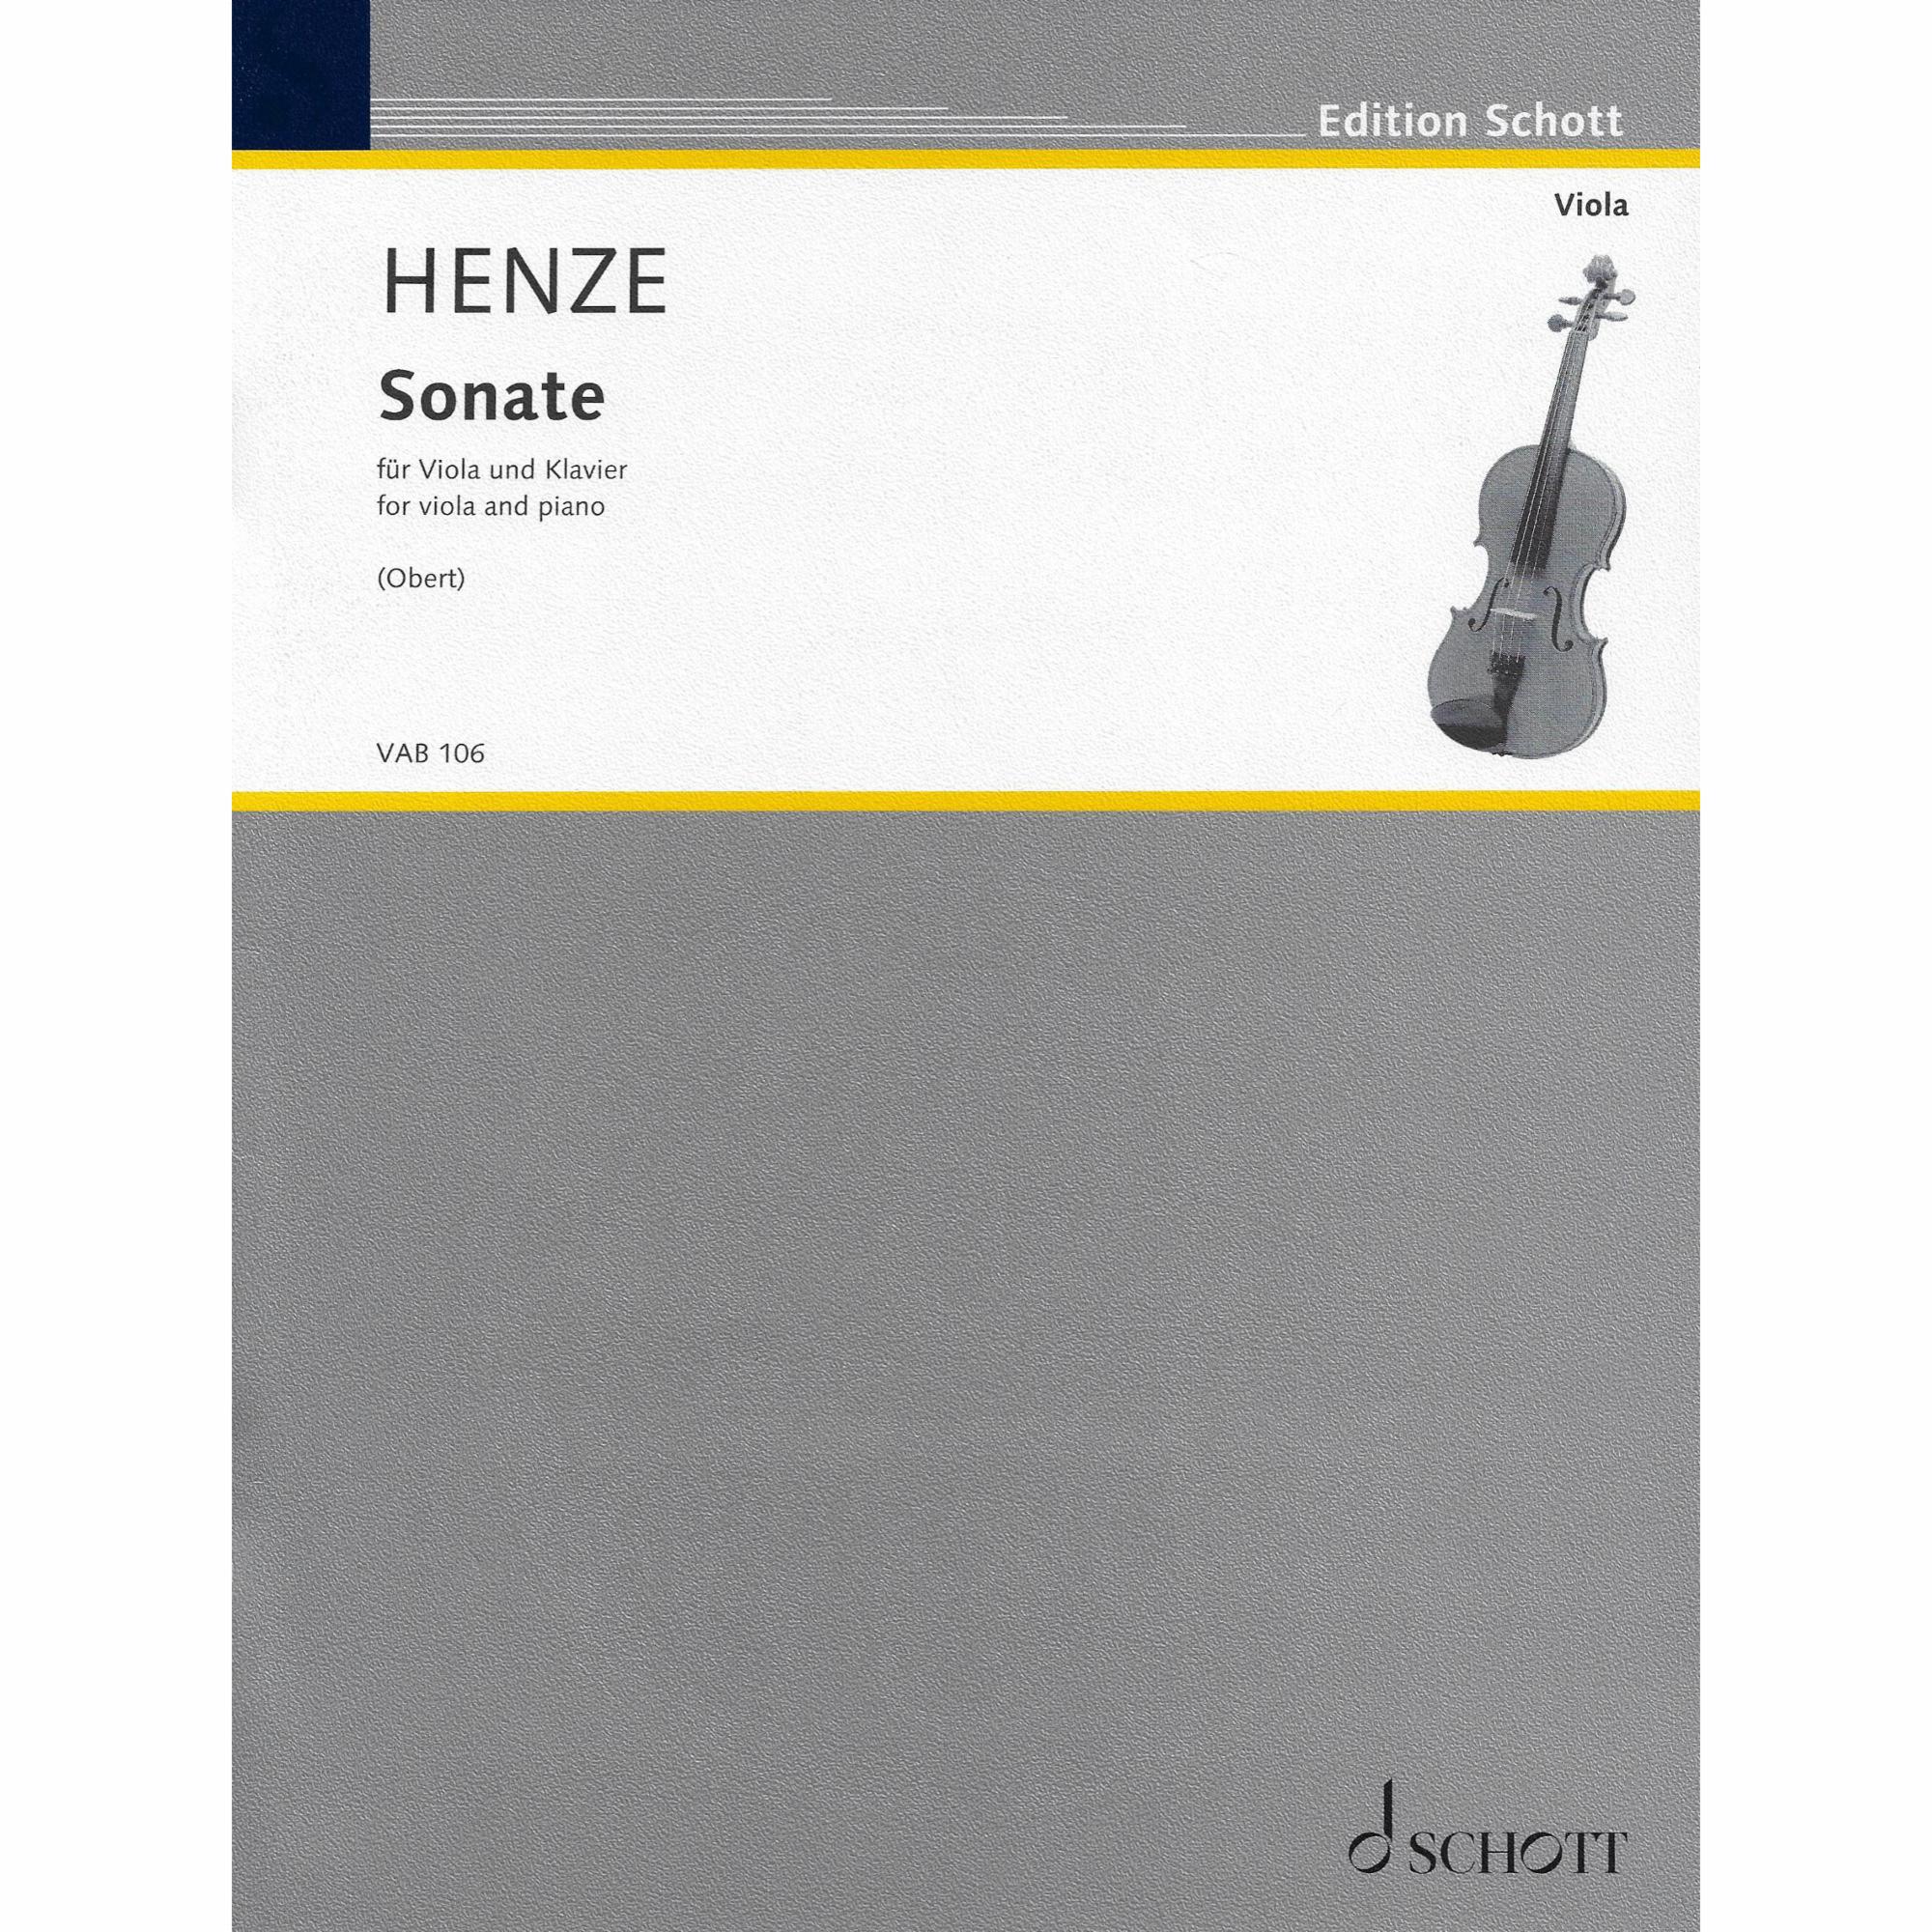 Henze -- Sonata for Viola and Piano